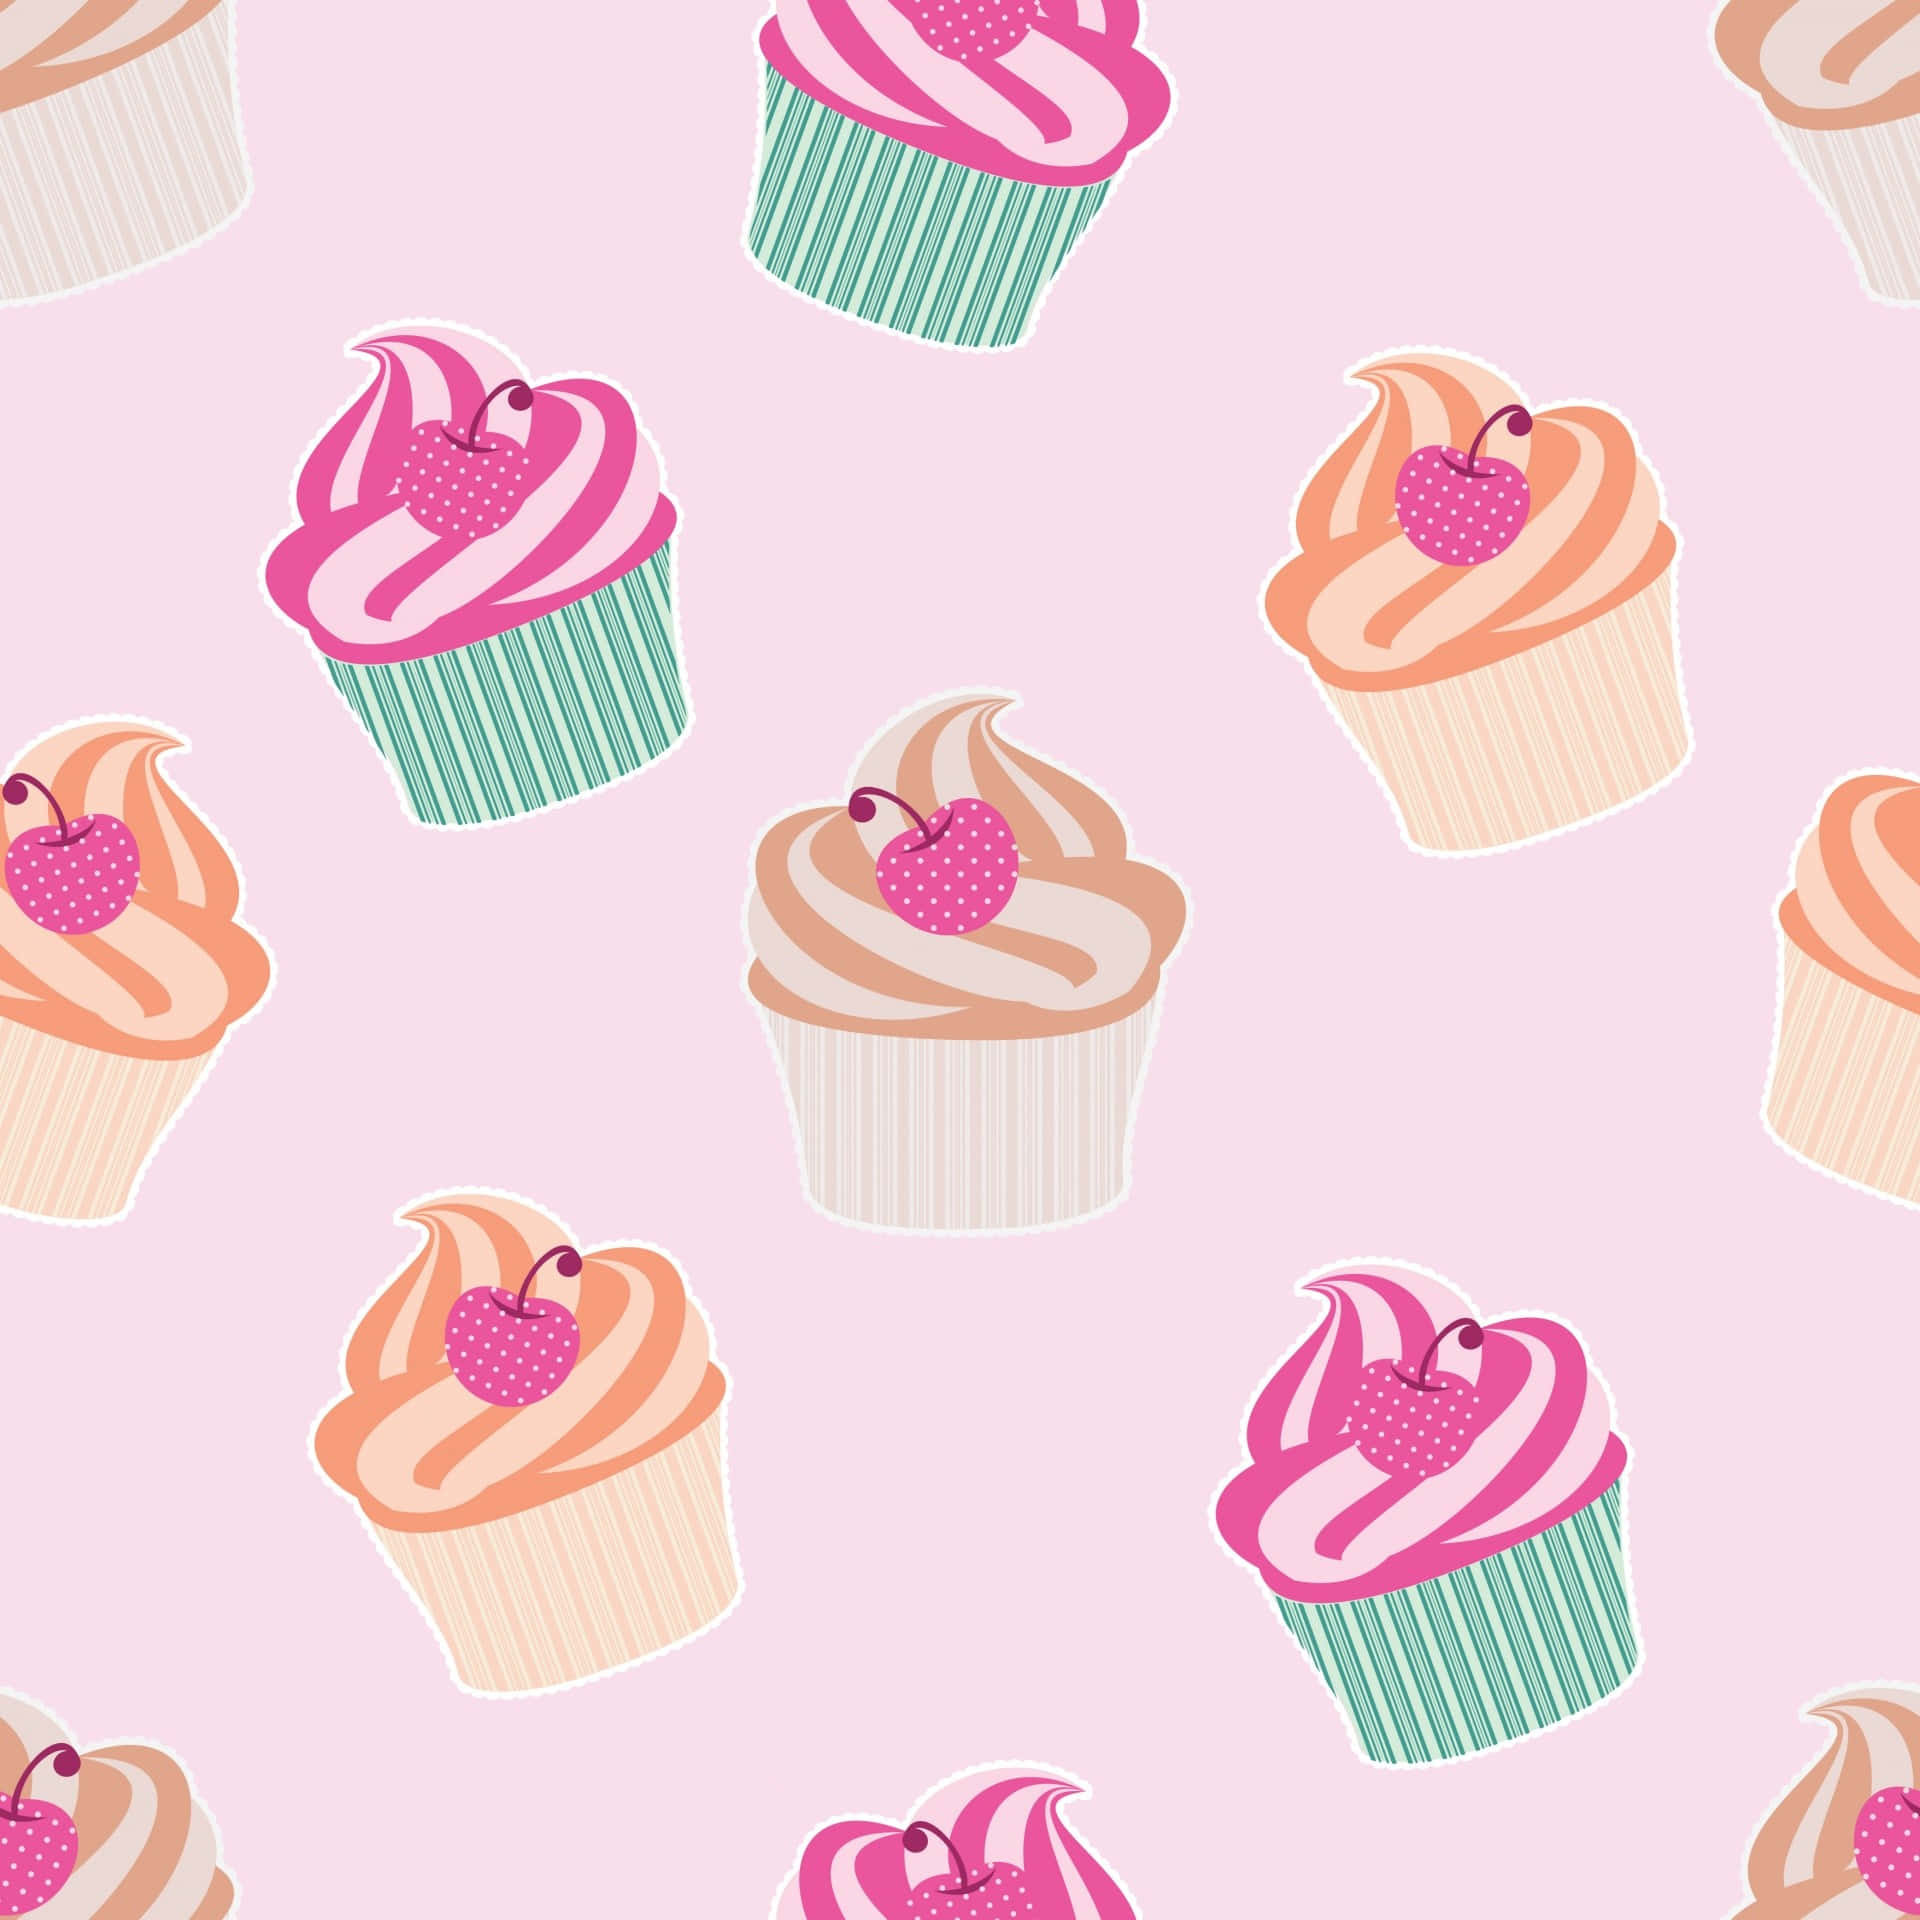 Adorable Sweet Delight: A Cute Cupcake Wallpaper